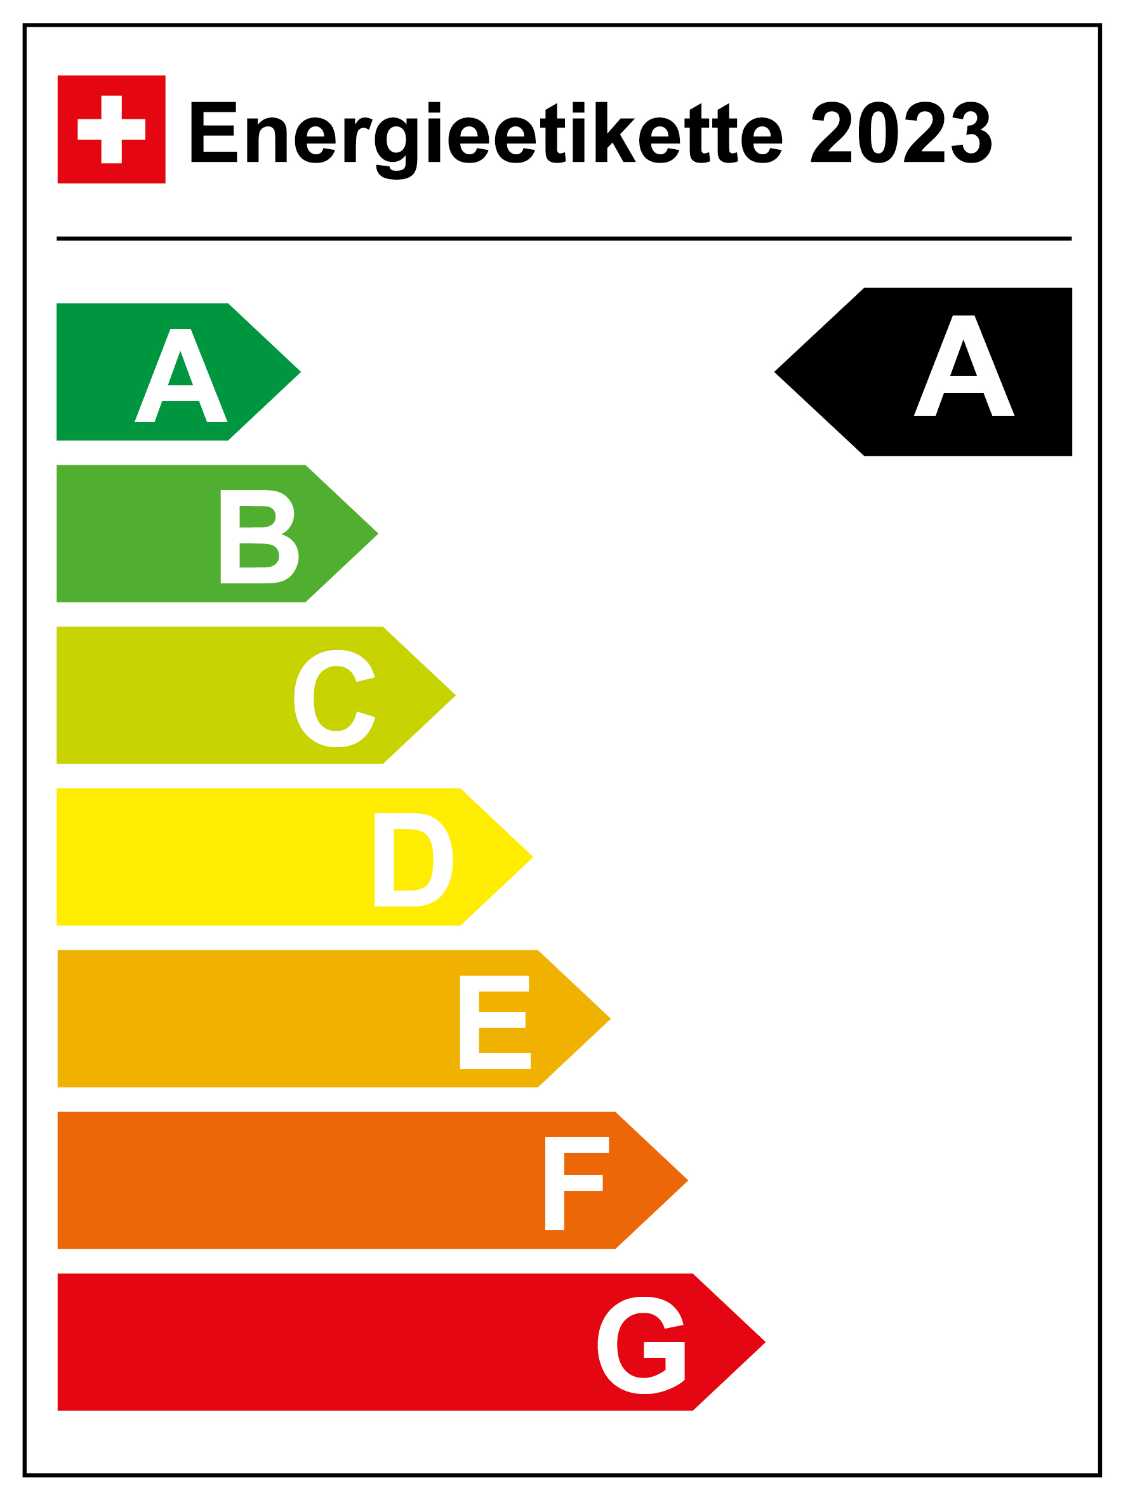 Schweiz - Energieeffizienz-Kategorie A (01/2023)